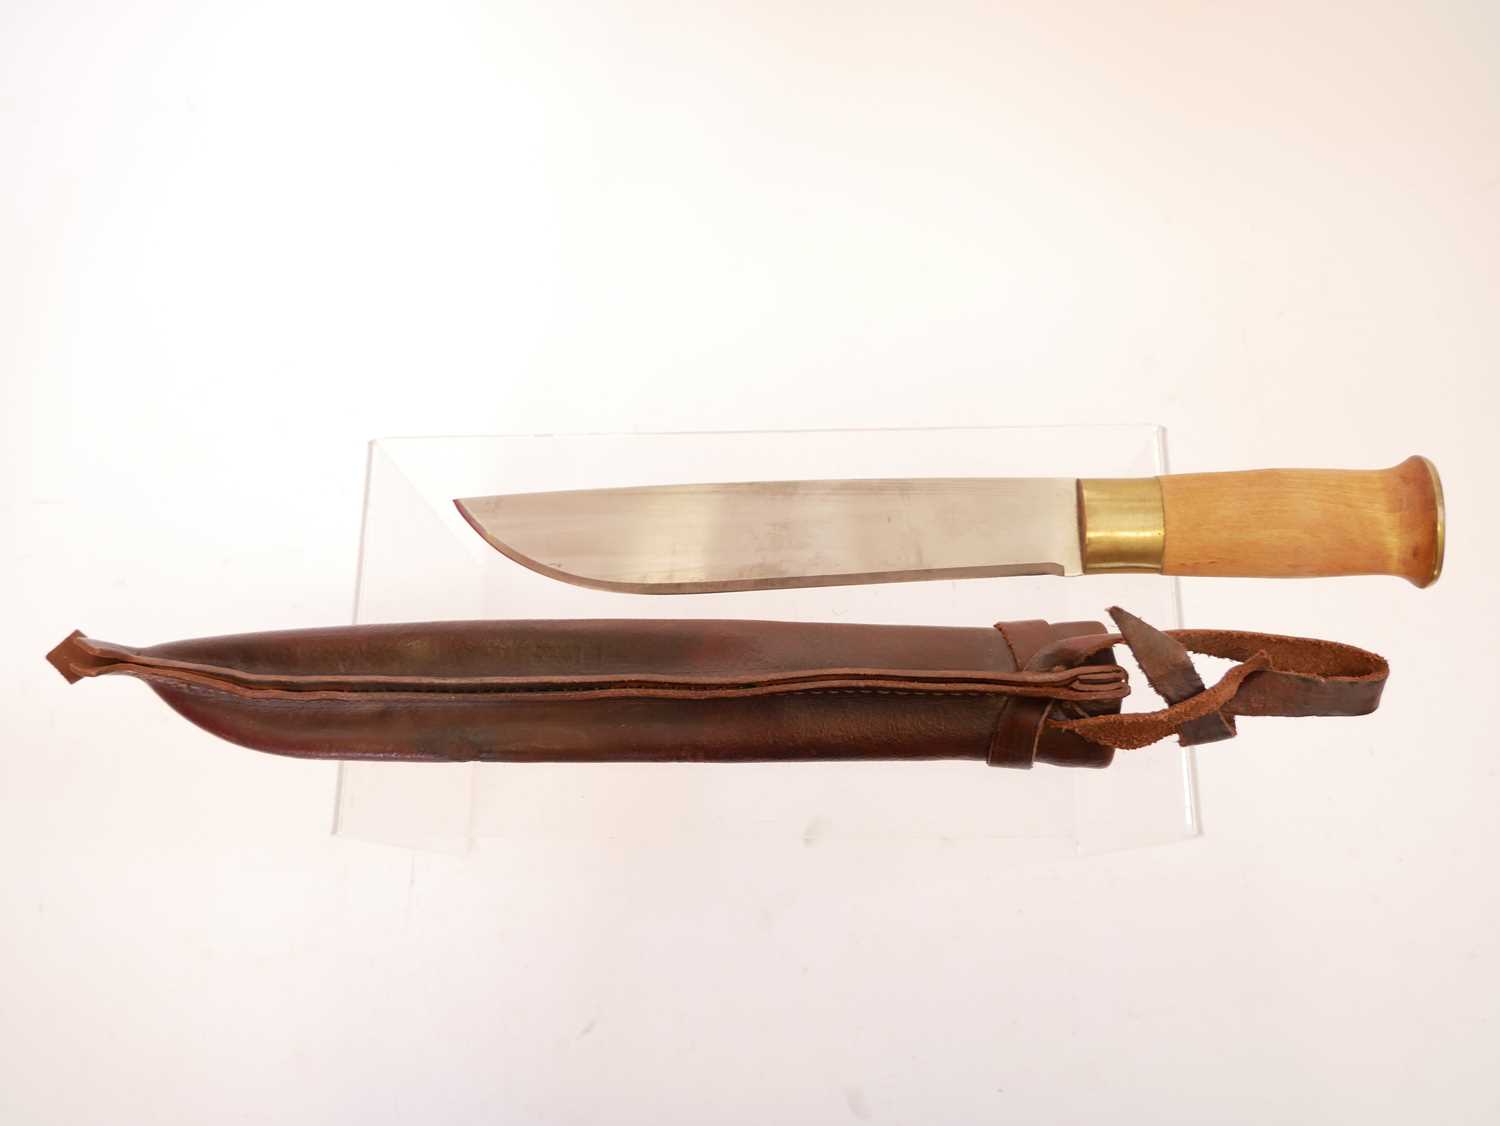 Knivsmed hunting knife, 9inch blade marked 'Knivsmed Stromeng Karasjok, Norway' with leather - Bild 4 aus 7